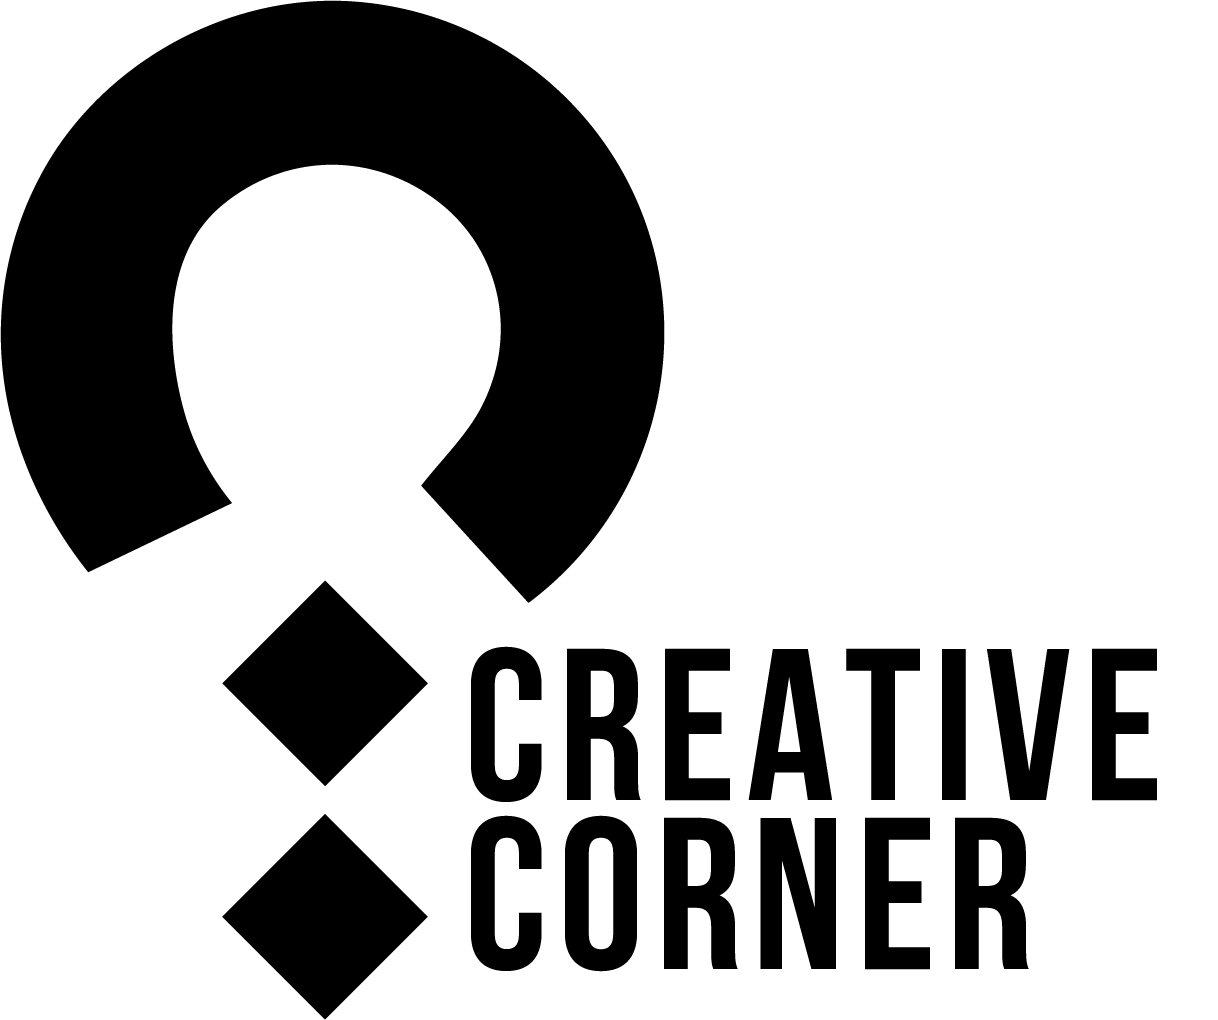 Creative corner logo